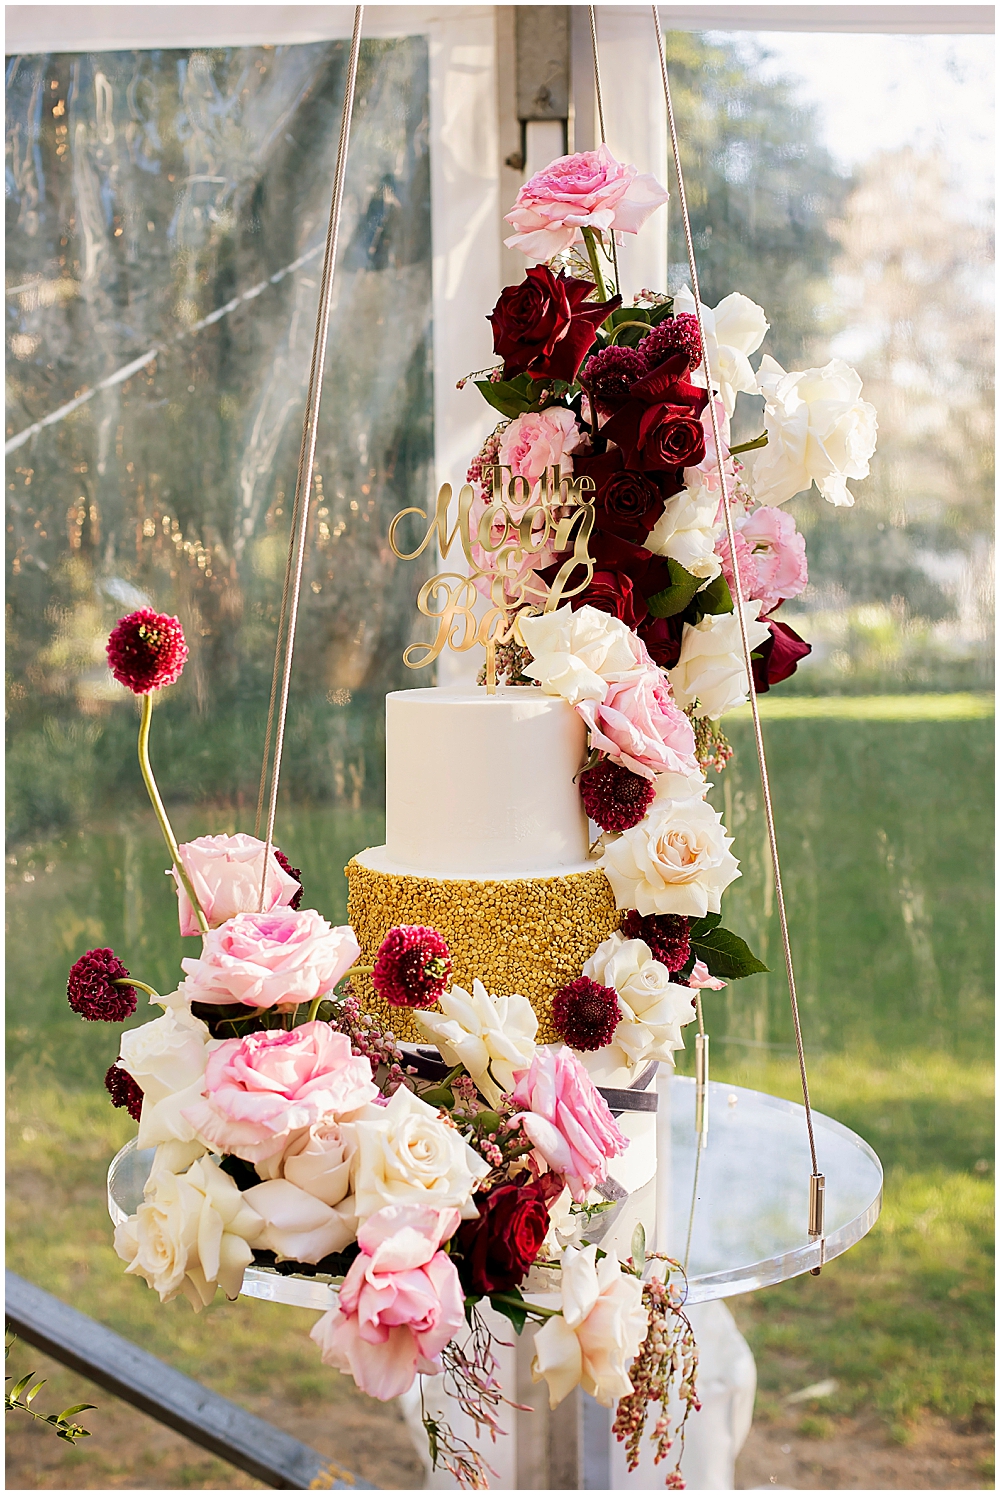 Bridal cake at Lamont House, Perth